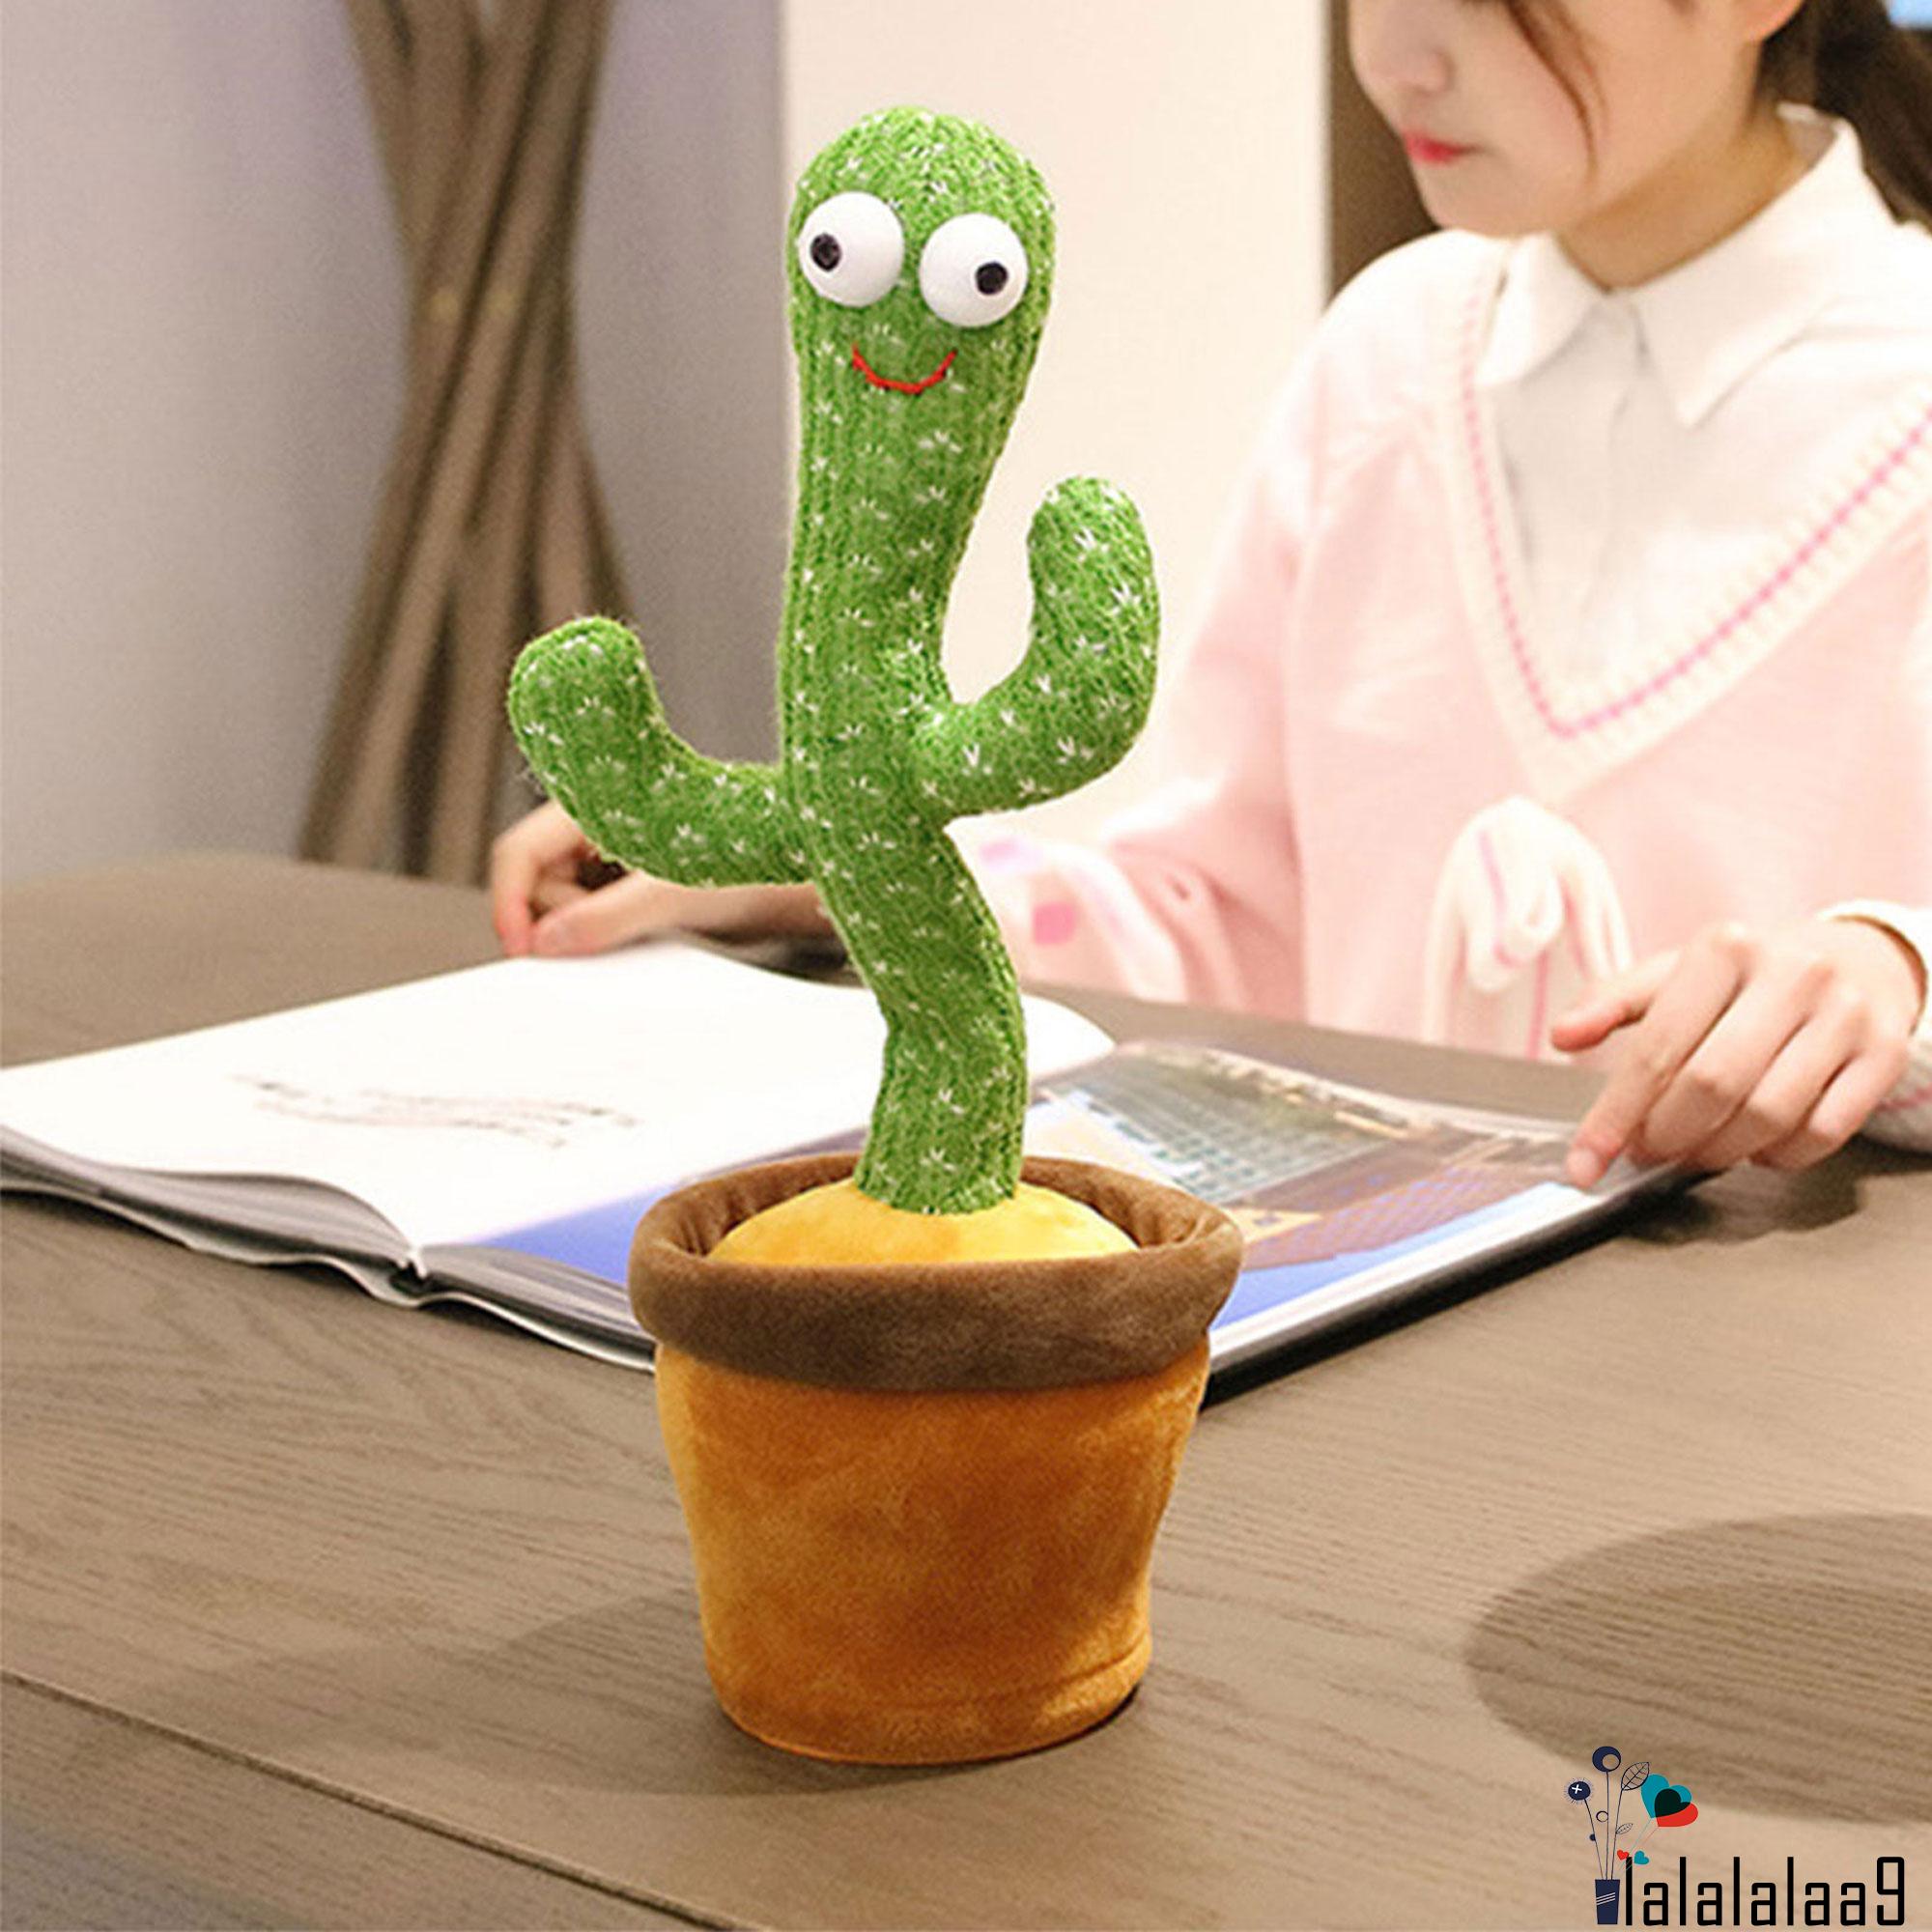 LA-Dancing Cactus Funny Early Childhood Education Electronic Shake Cute Plush Toy (Green)